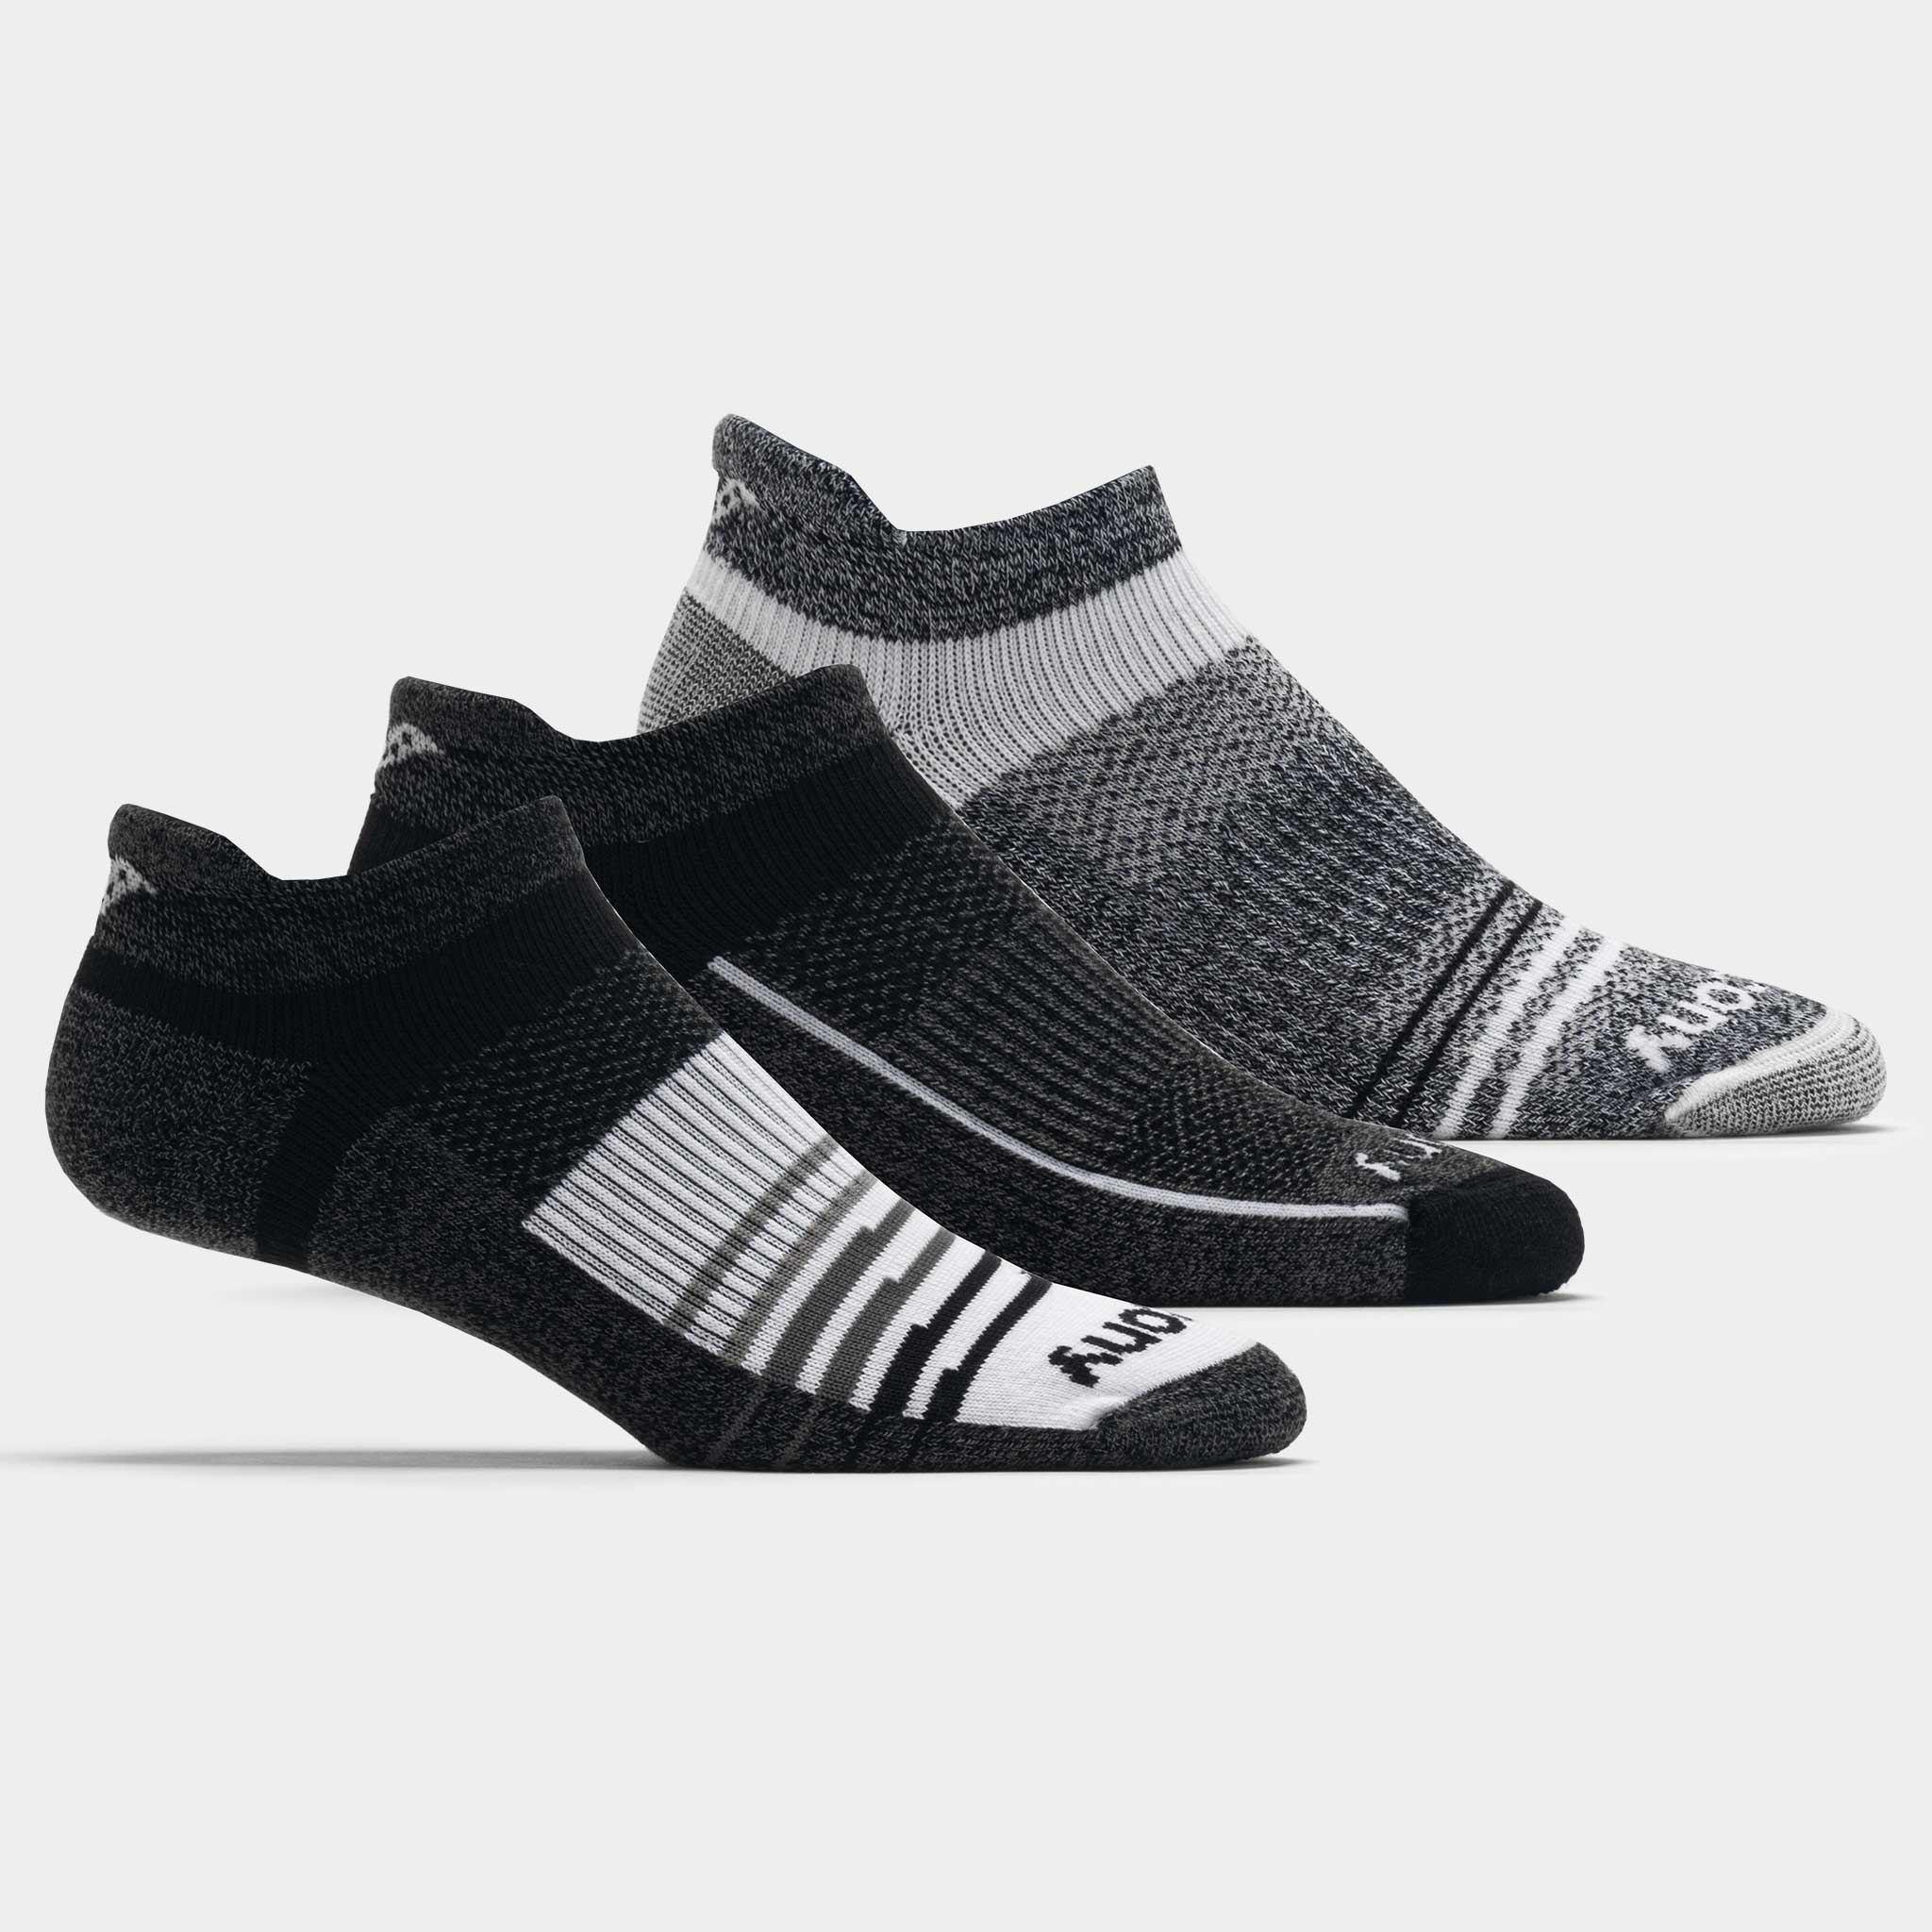 Saucony Inferno Merino Wool No Show Tab Socks 3 Pack